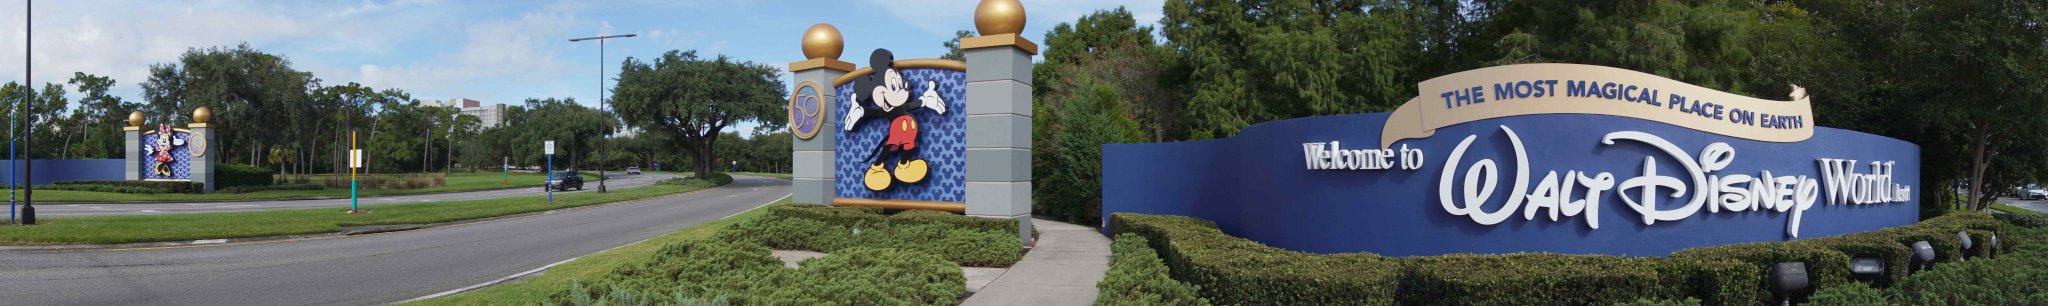 Walt Disney World Sign, Bioreconstruct